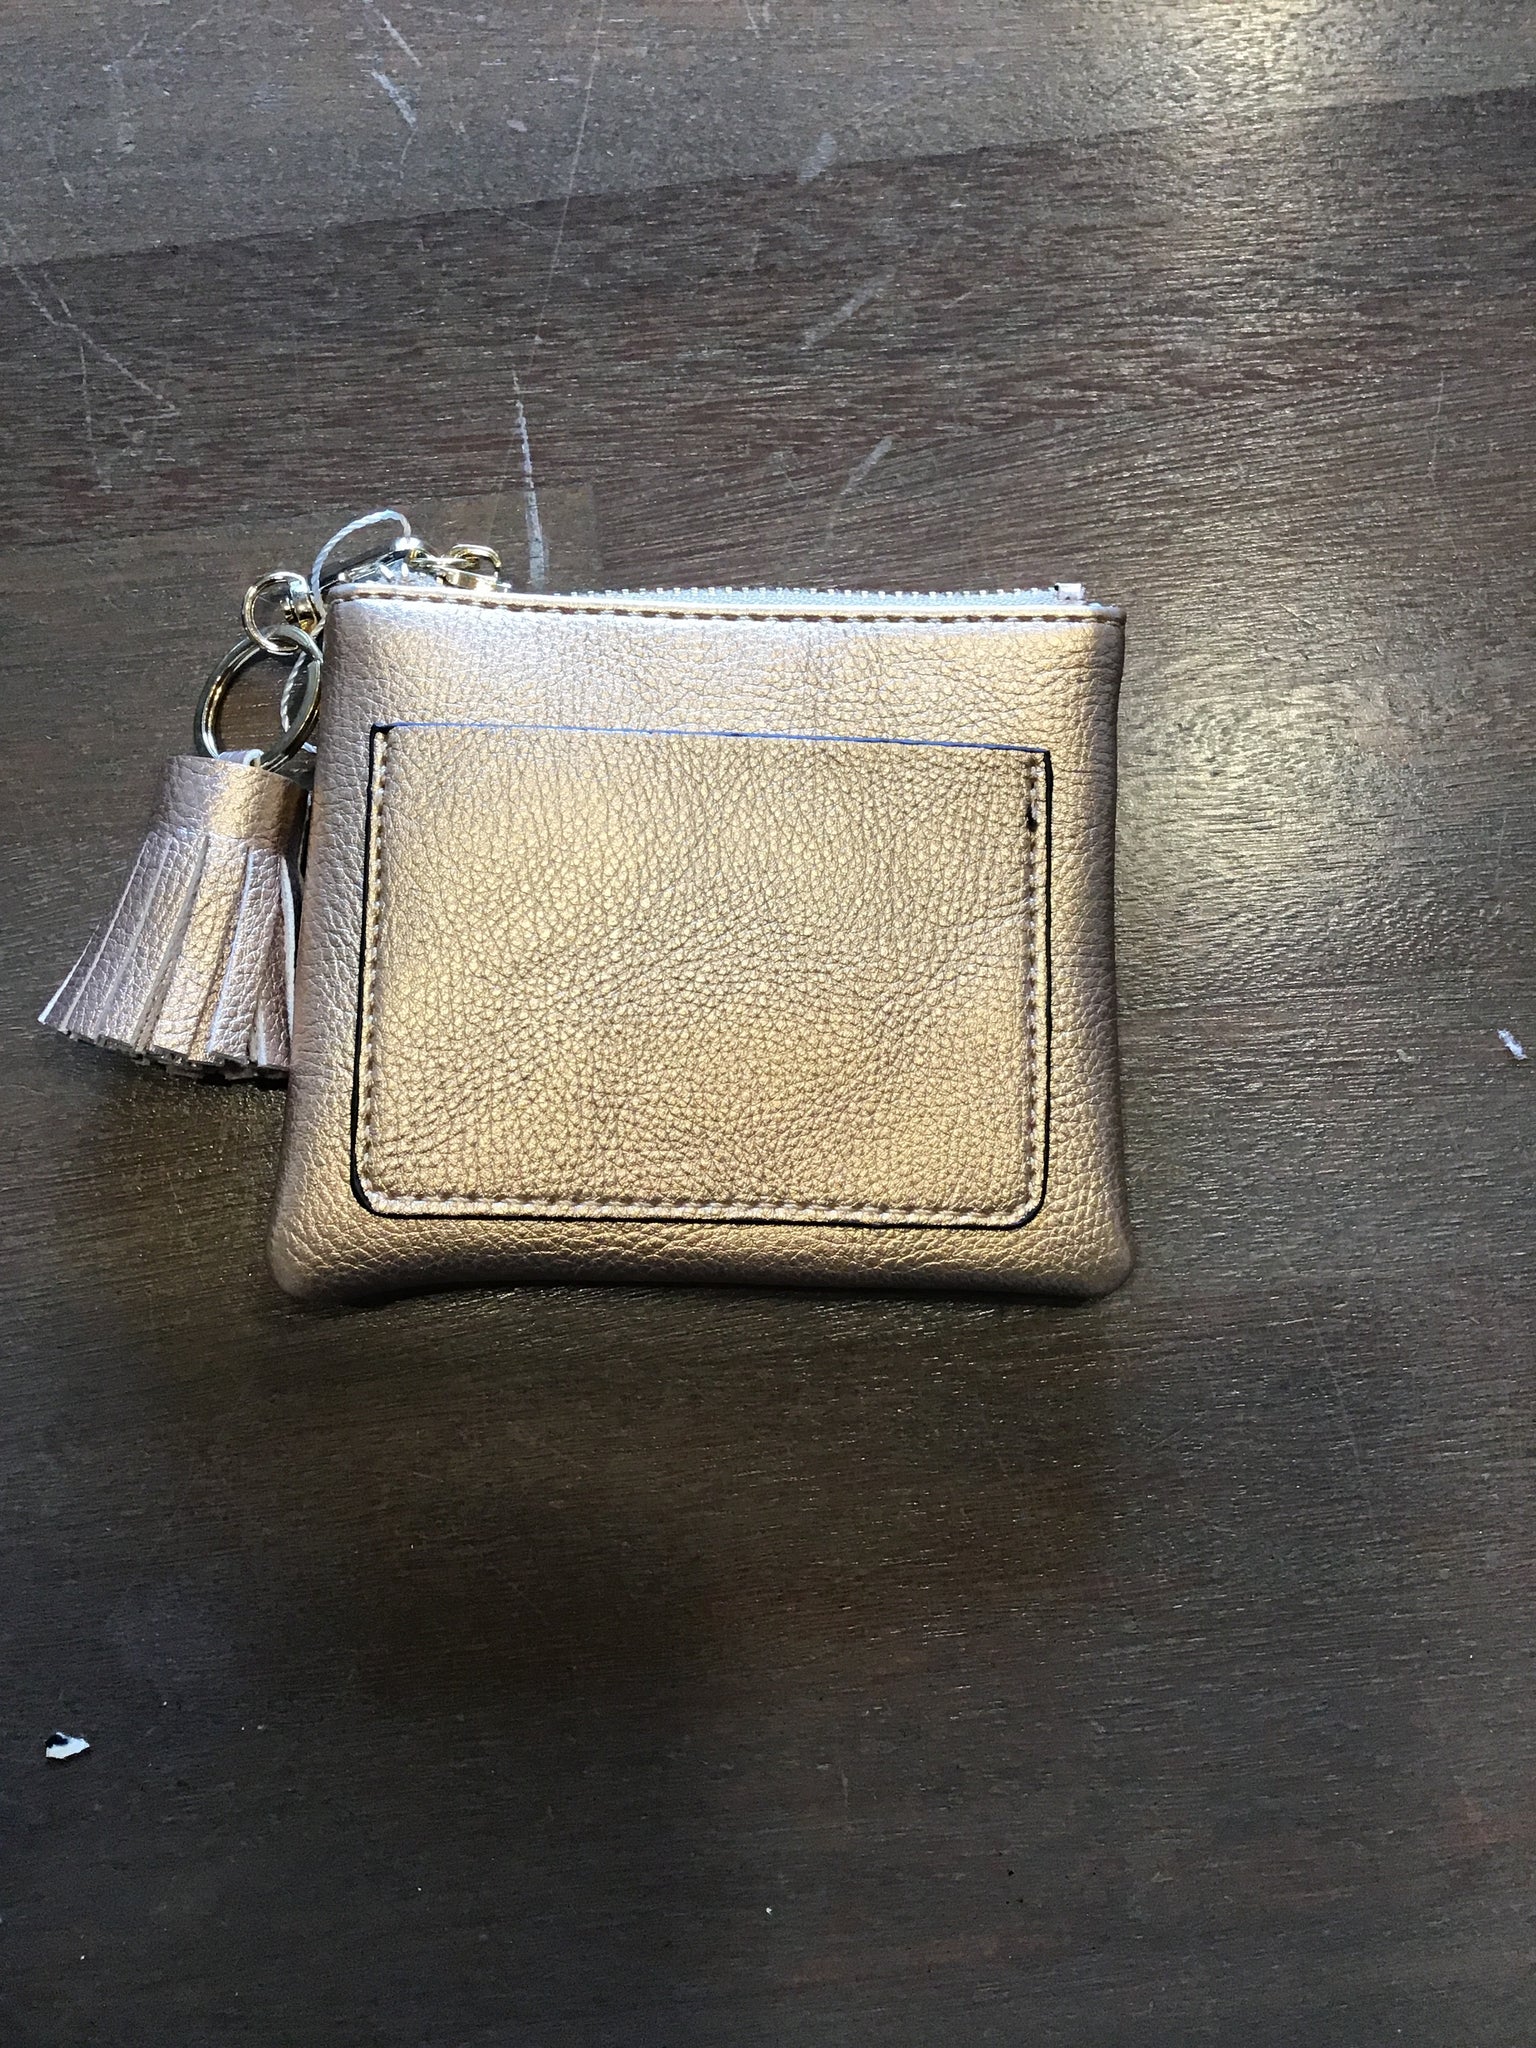 Rose gold leather wallet